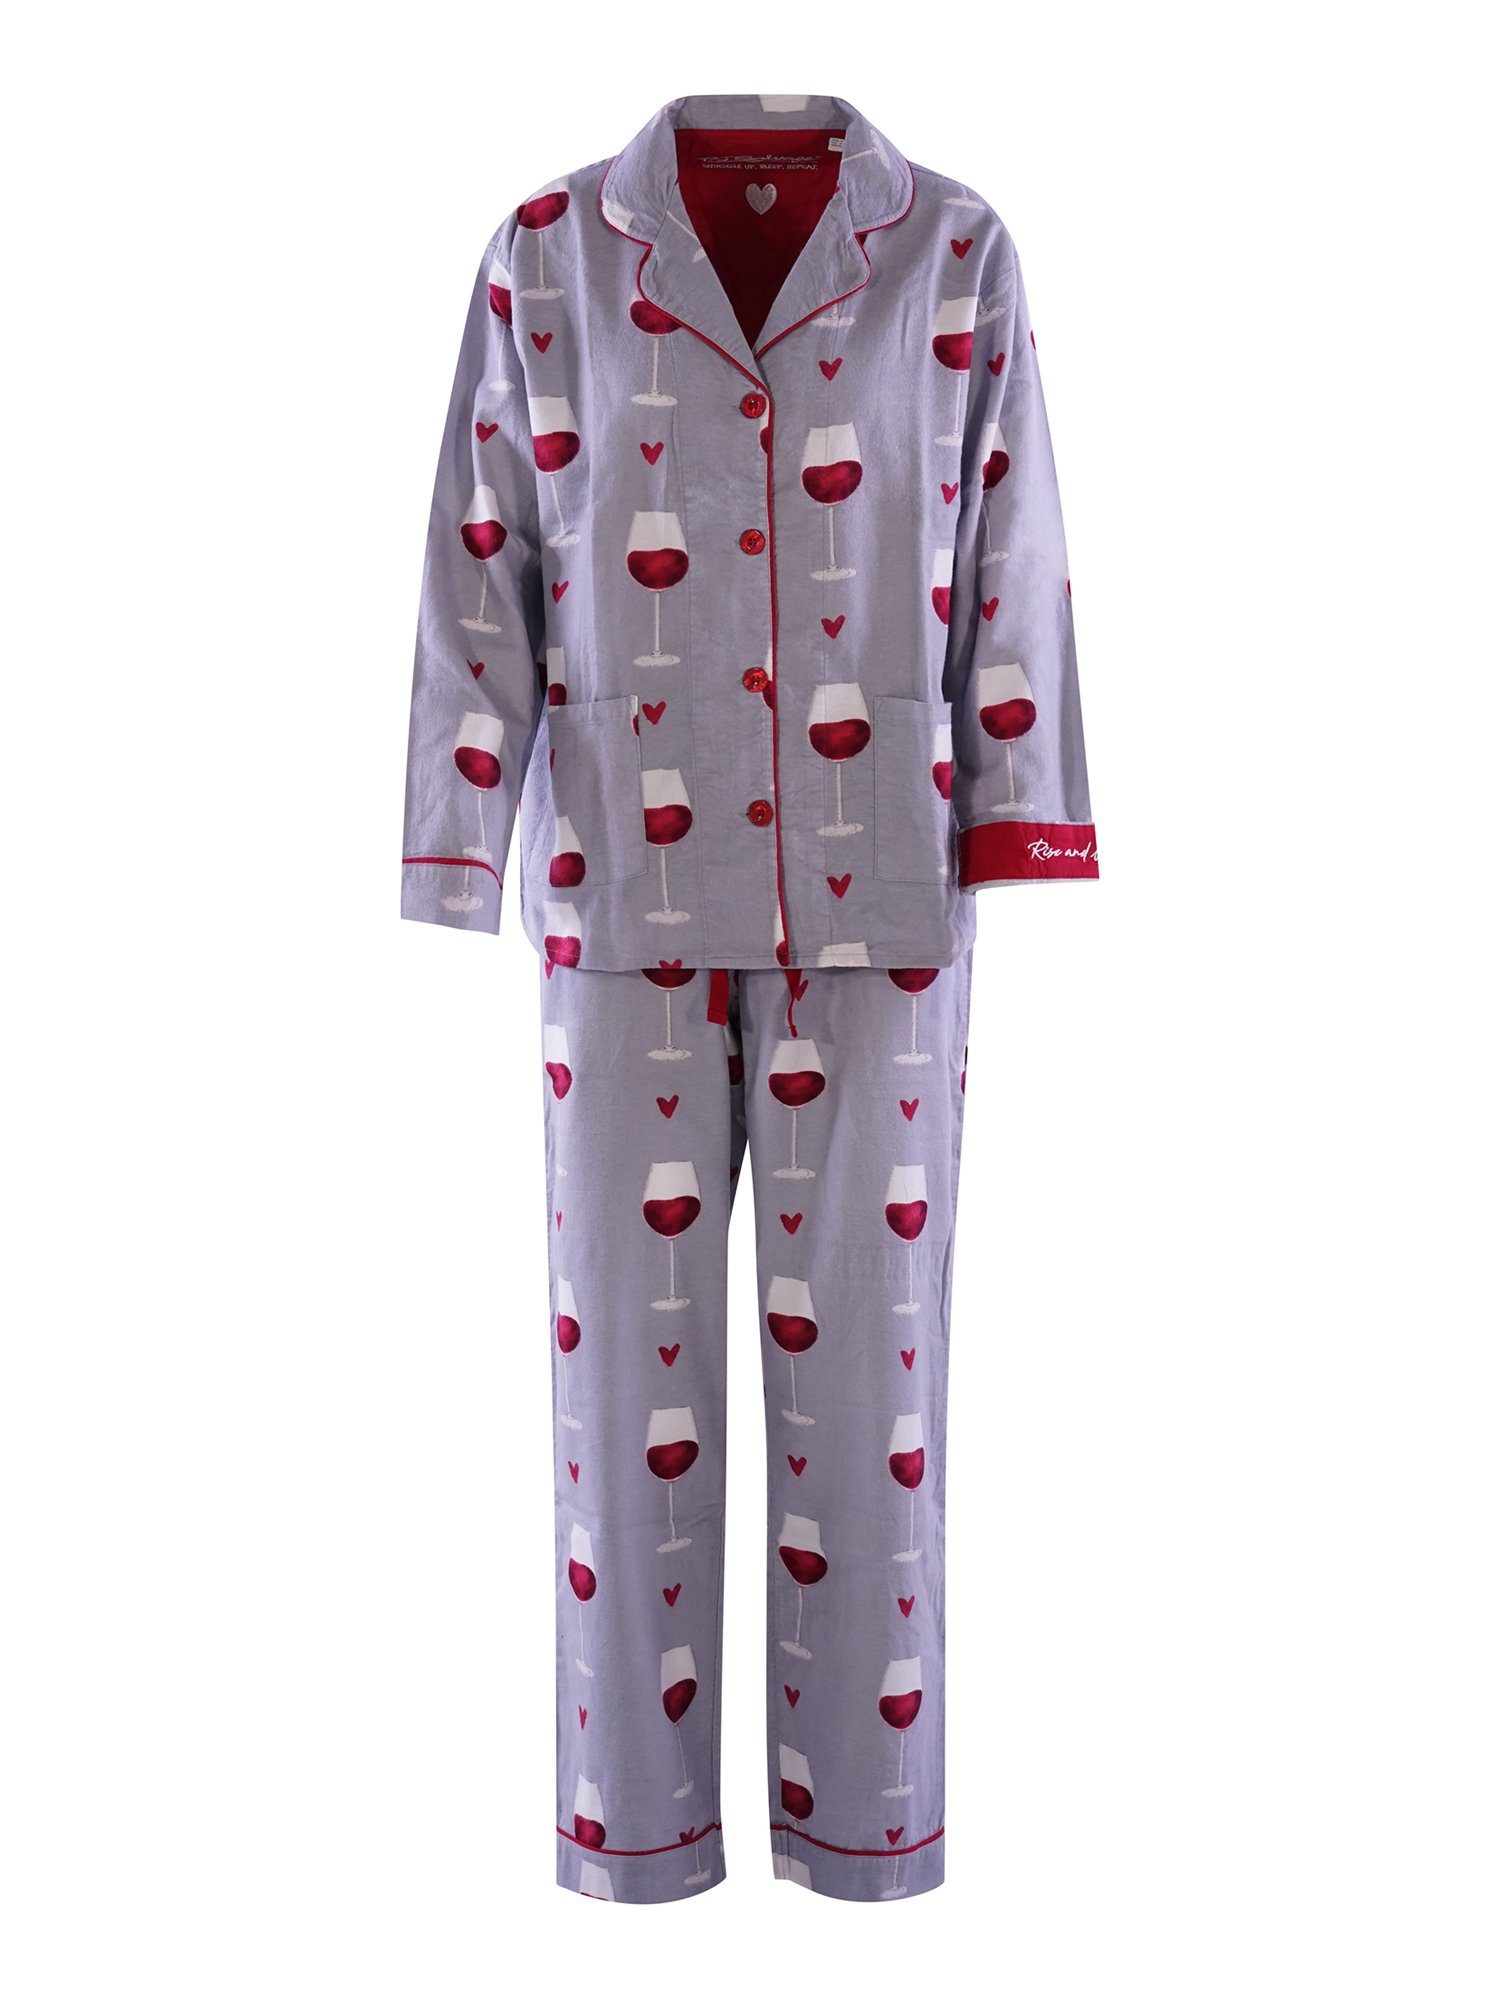 PJ Salvage Pyjama Flanells schlafanzug pyjama schlafmode grau